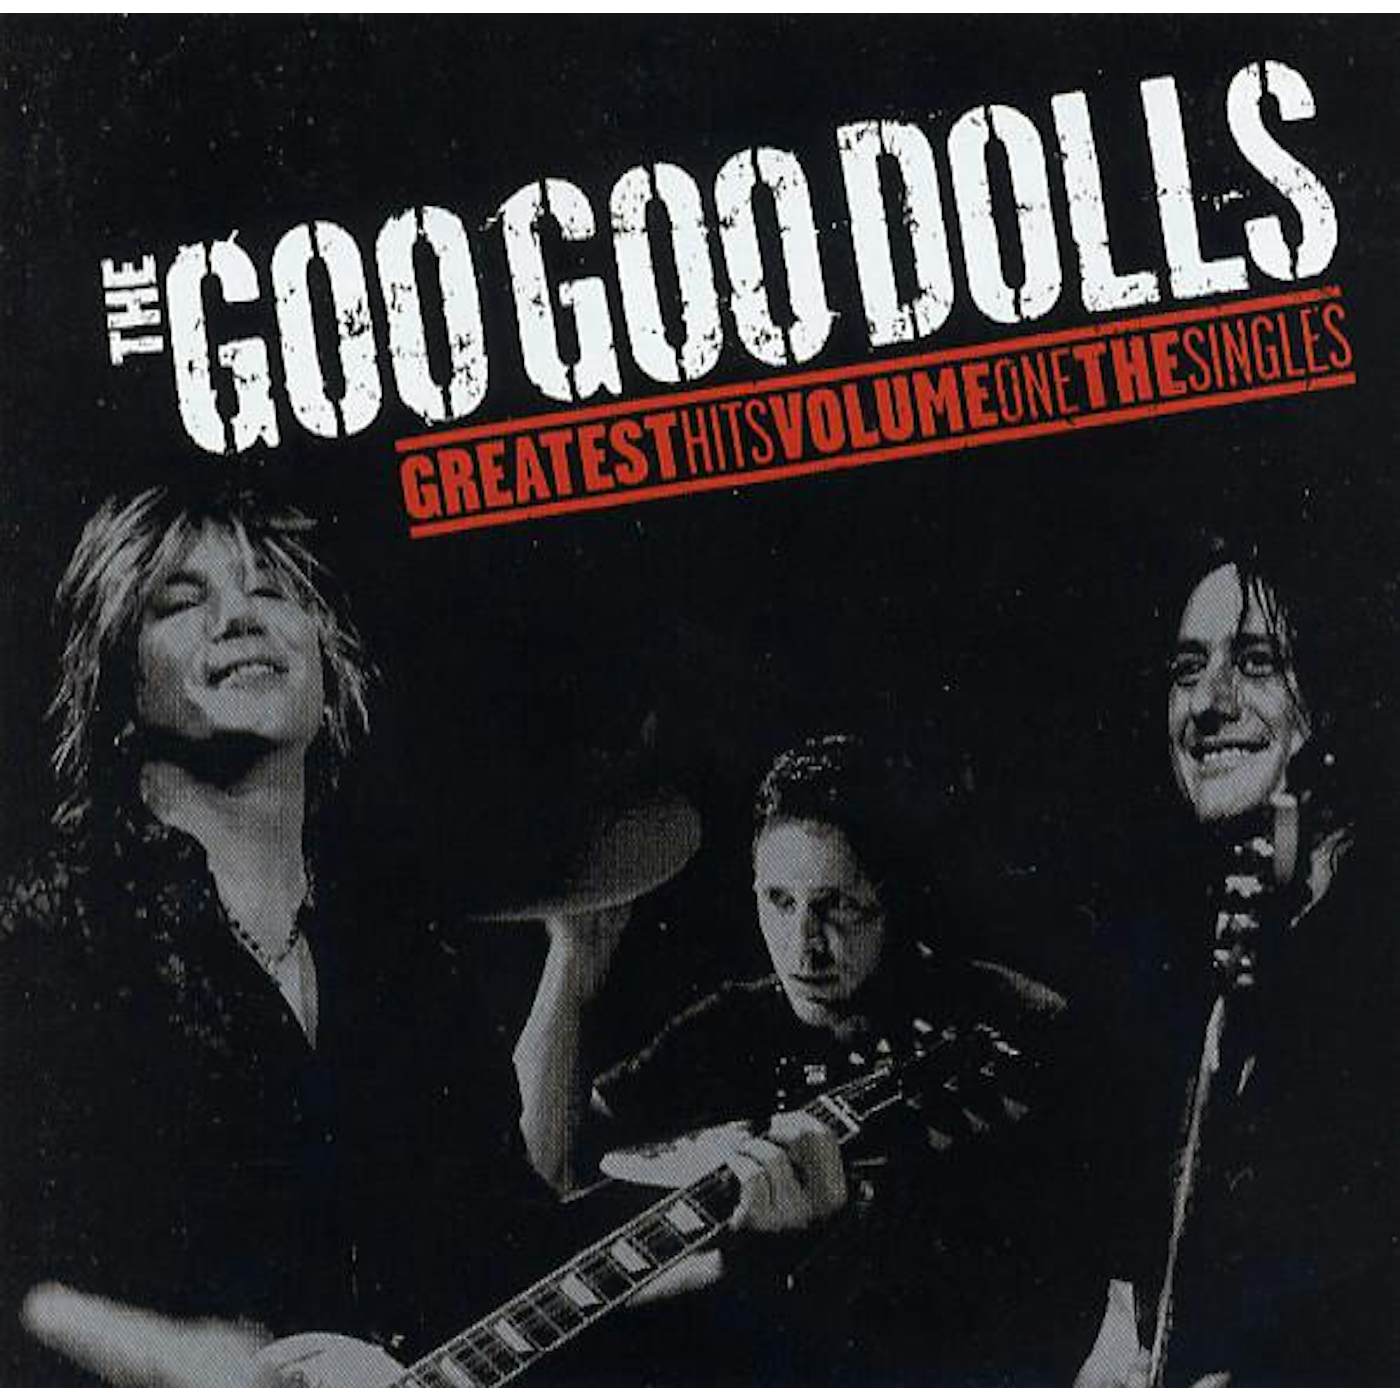 The Goo Goo Dolls GREATEST HITS VOL.1: THE SINGLES CD